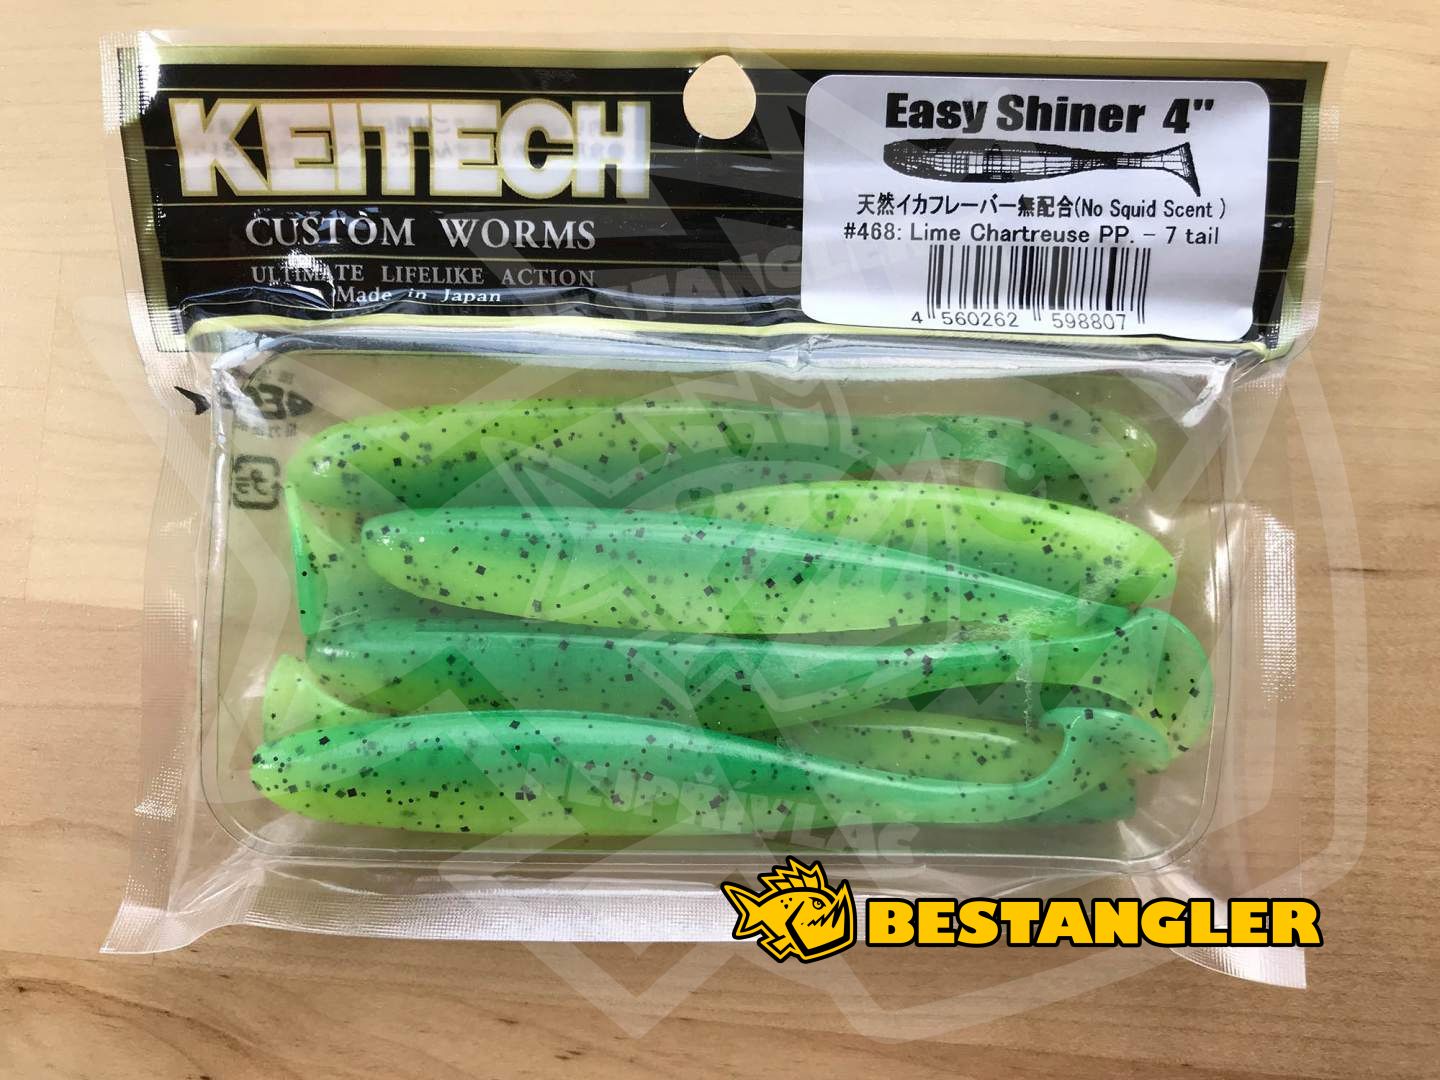 Keitech Easy Shiner 4.5 Fire Perch